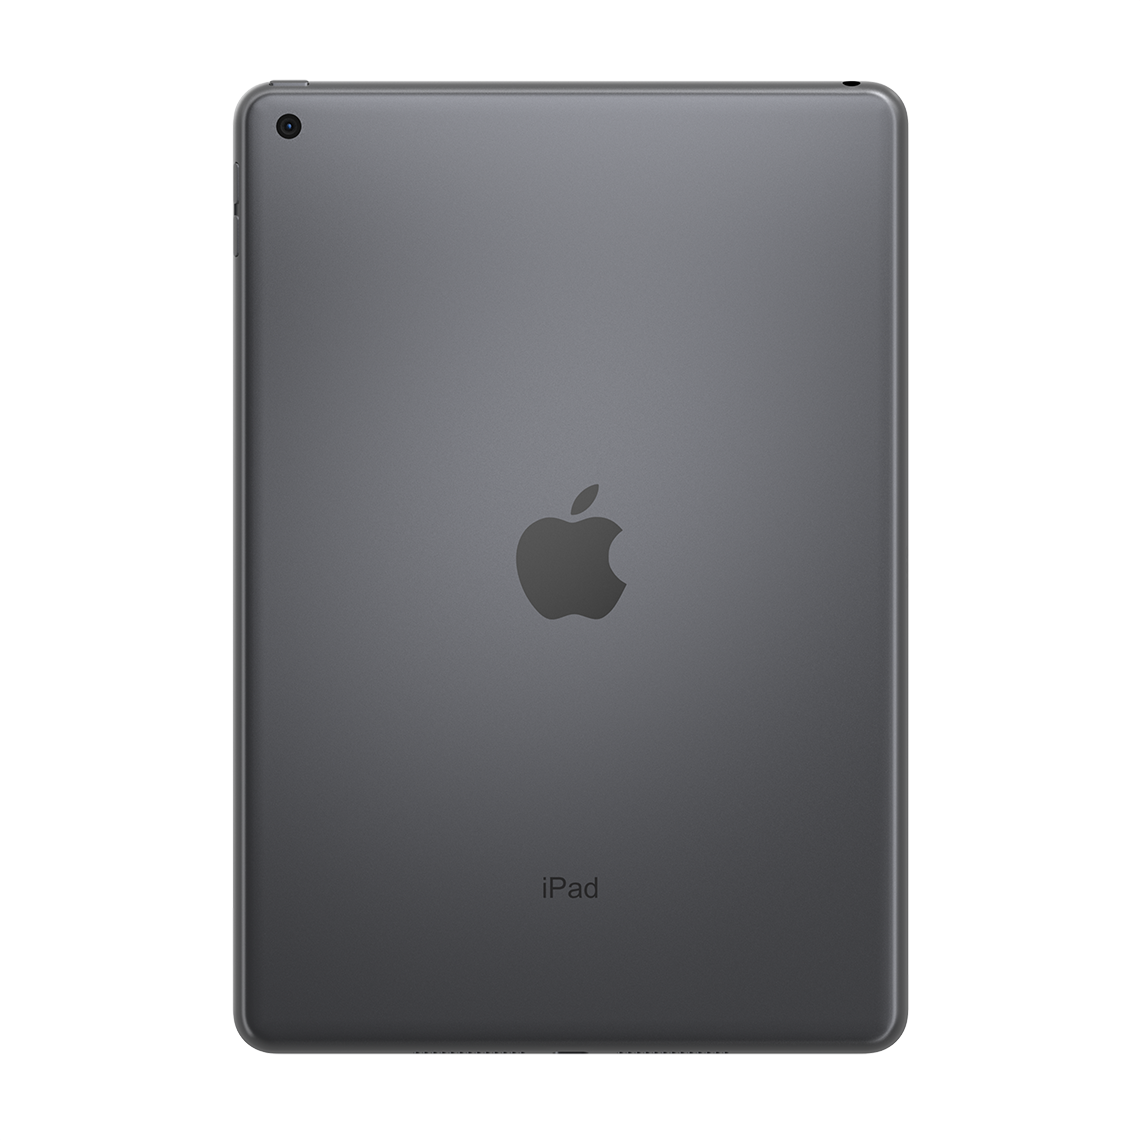 Apple iPad 10.2-inch 9th Generation - Space Gray - 64GB, Wi-Fi + Cellular, Grade A